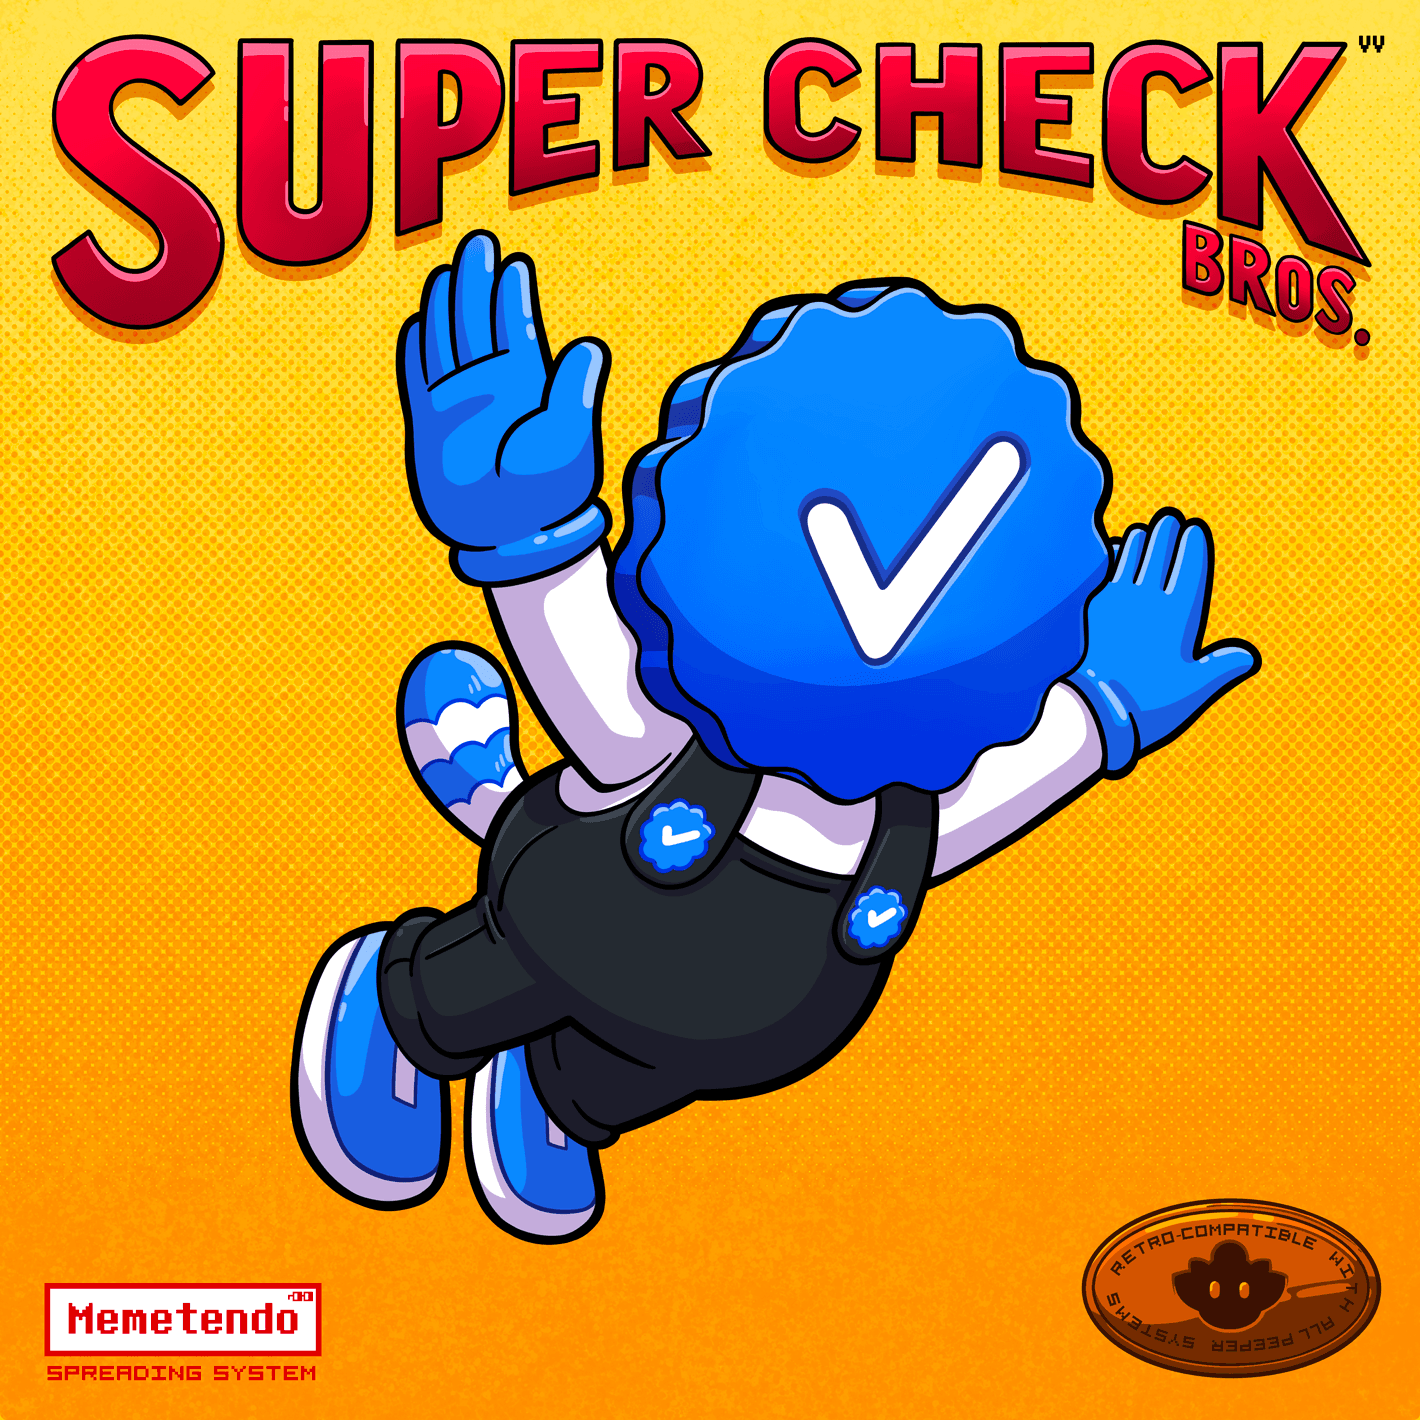 Super Check Bros. 188